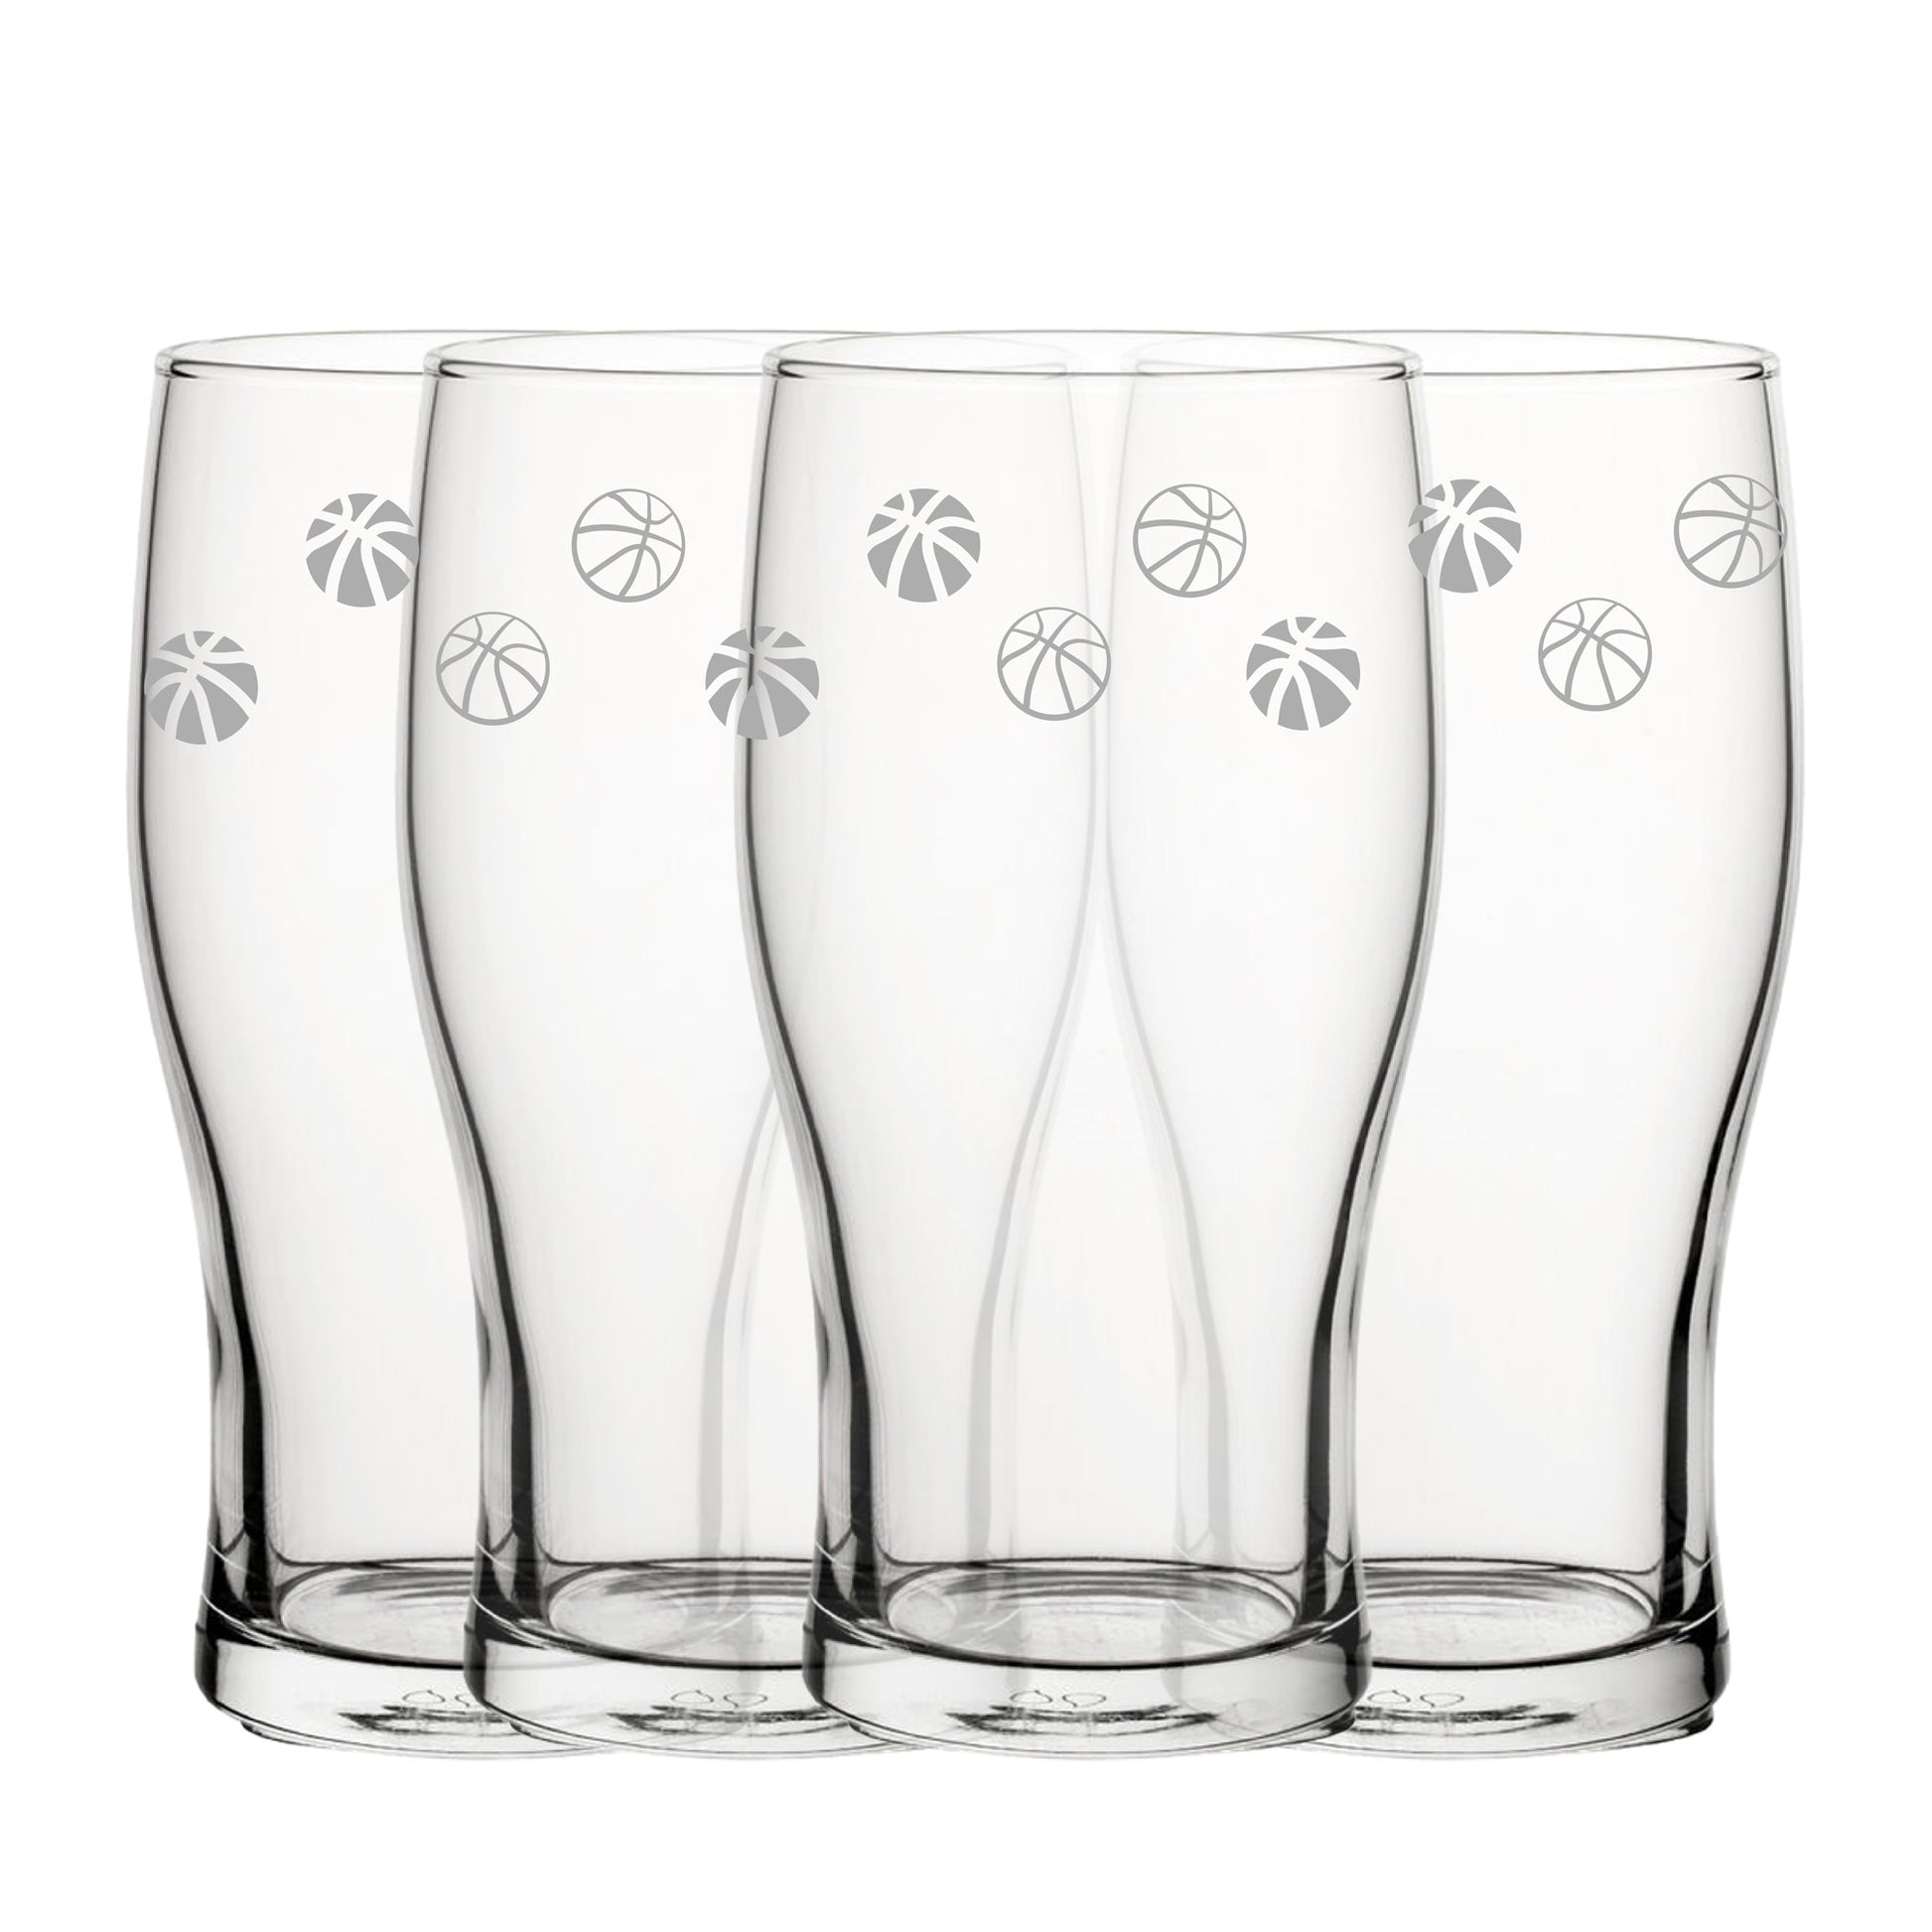 Engraved Basketball Pattern Pint Glass Set of 4, 20oz Tulip Glasses Image 1